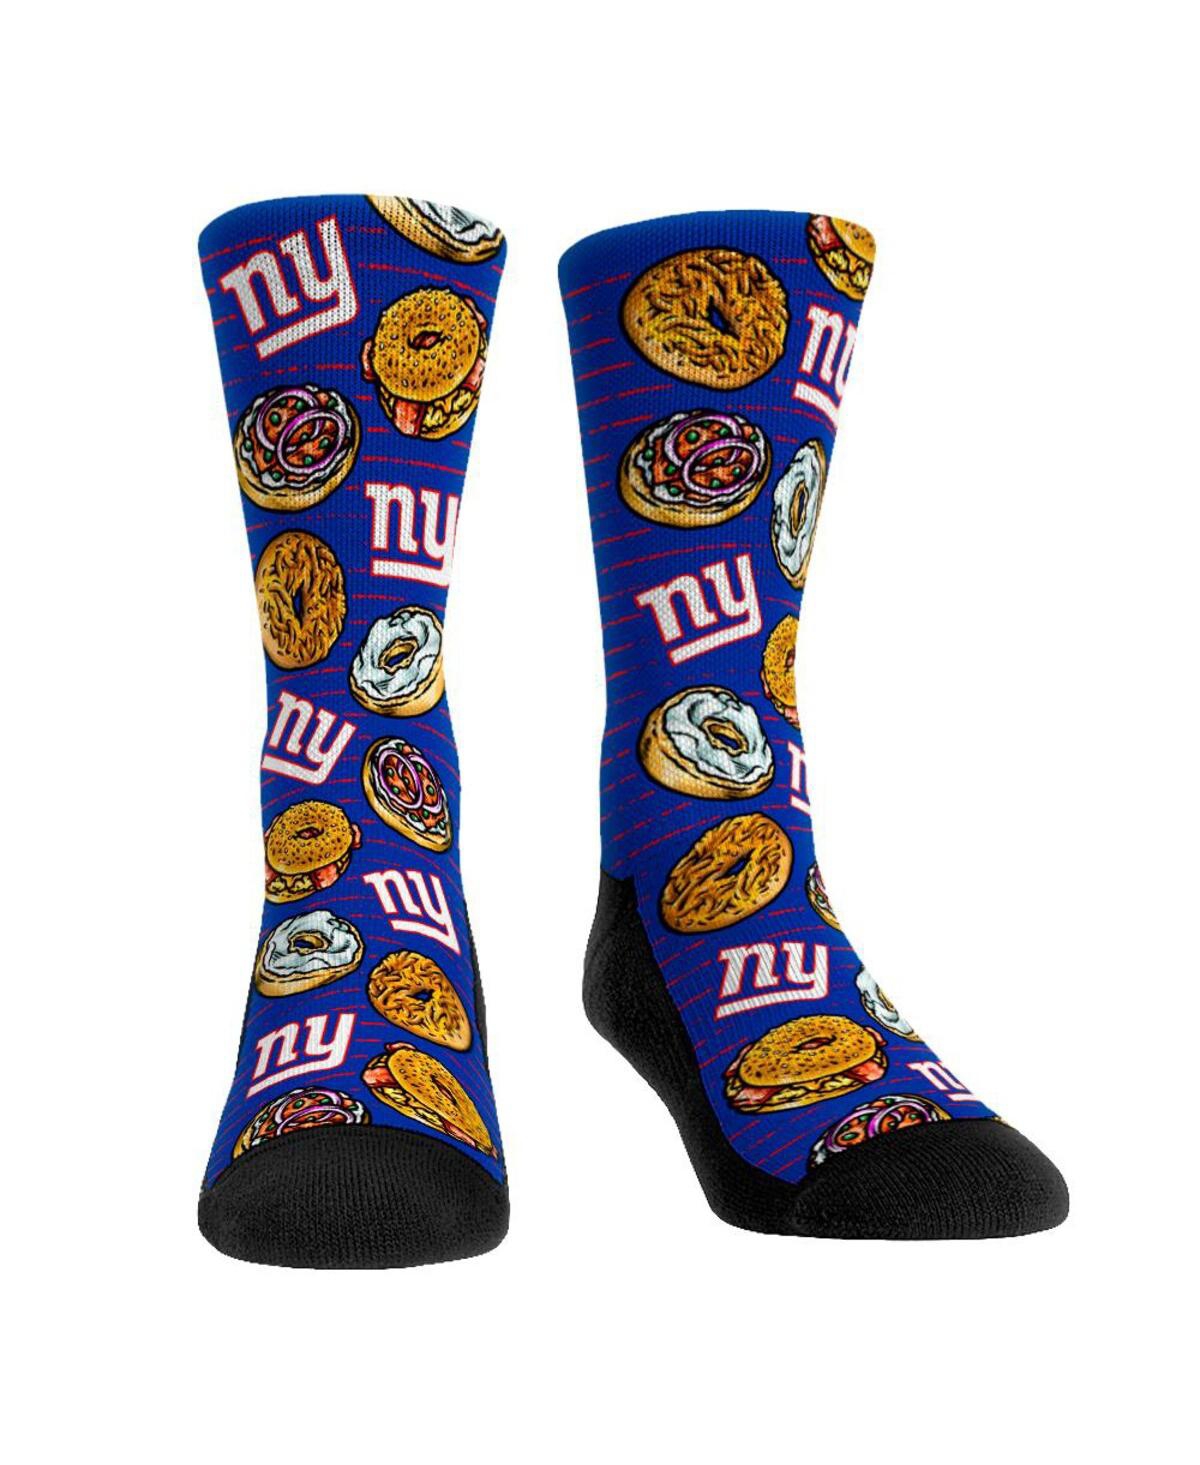 Men's Rock Em Socks New York Giants Localized Food Crew Socks - Navy